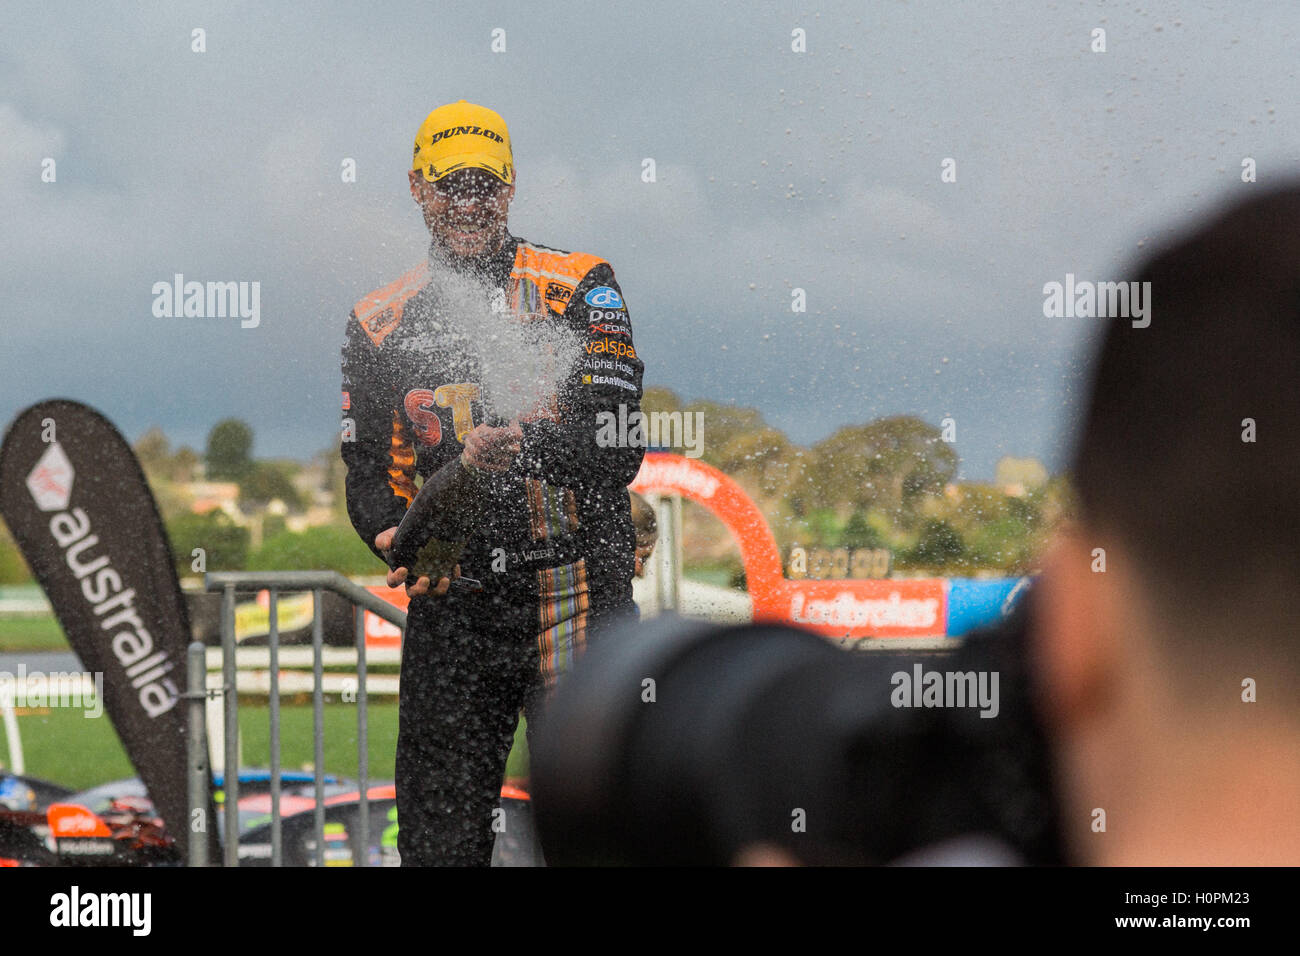 MELBOURNE/AUSTRALIA - SEPTEMBER 17, 2016: Red Bull driver Shane Van Gisbergen spraying champagne after his podium finish at the  Stock Photo